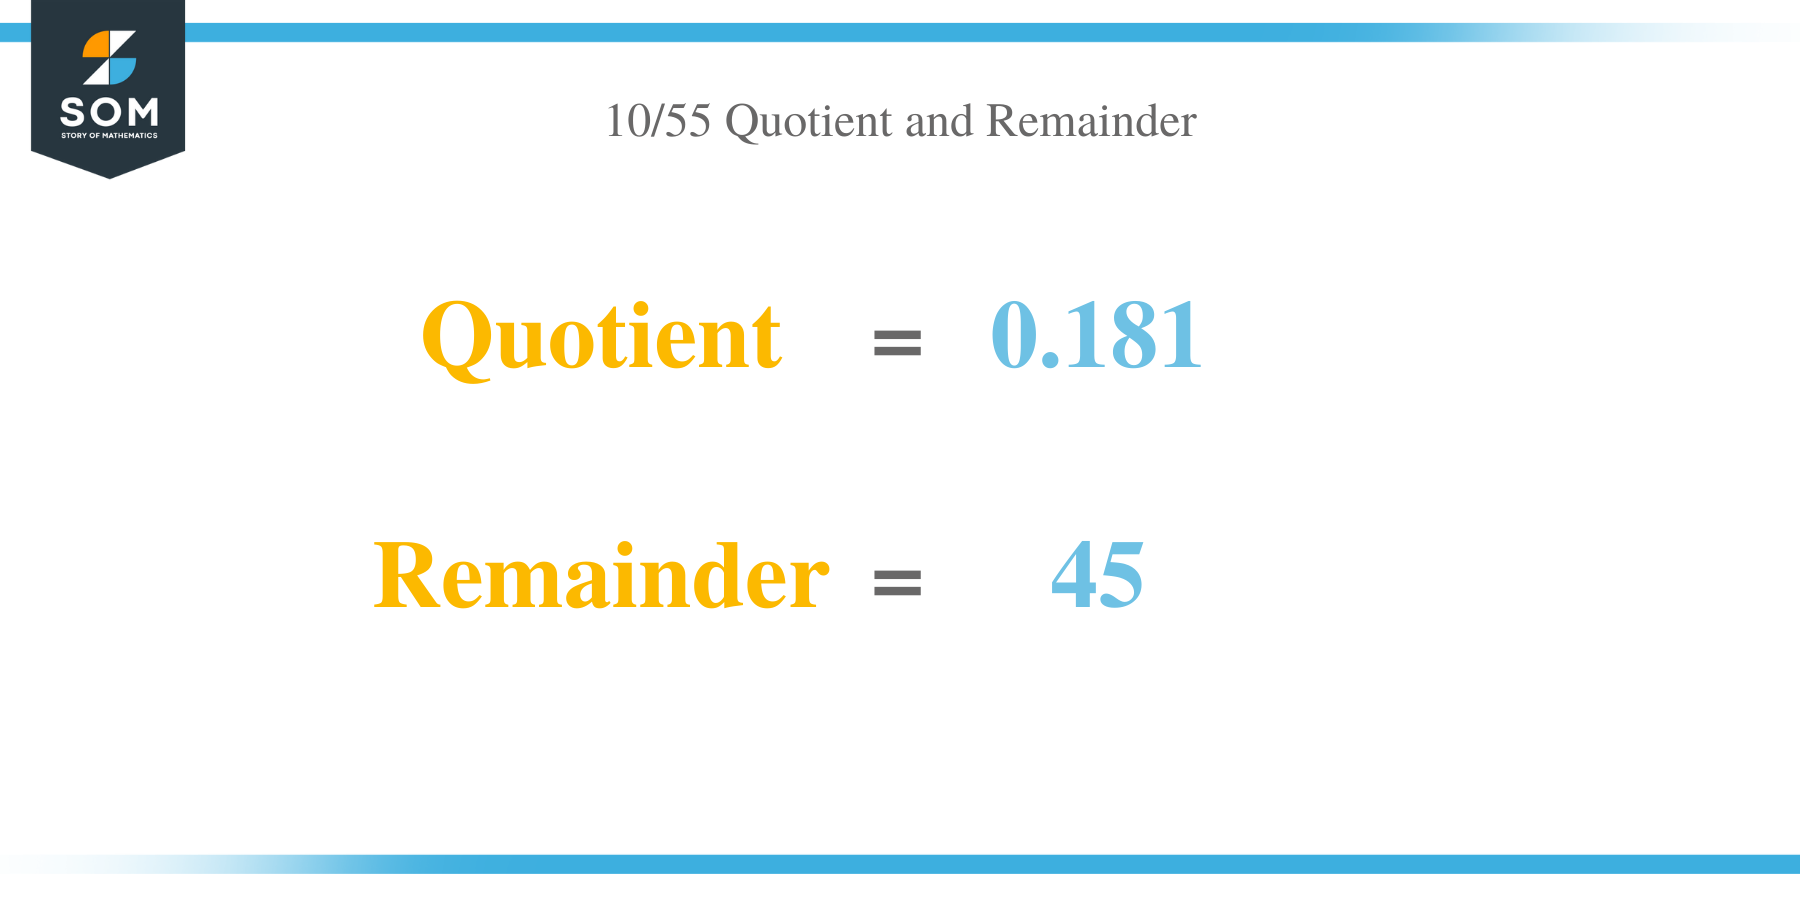 Quotient and Remainder of 10 per 55